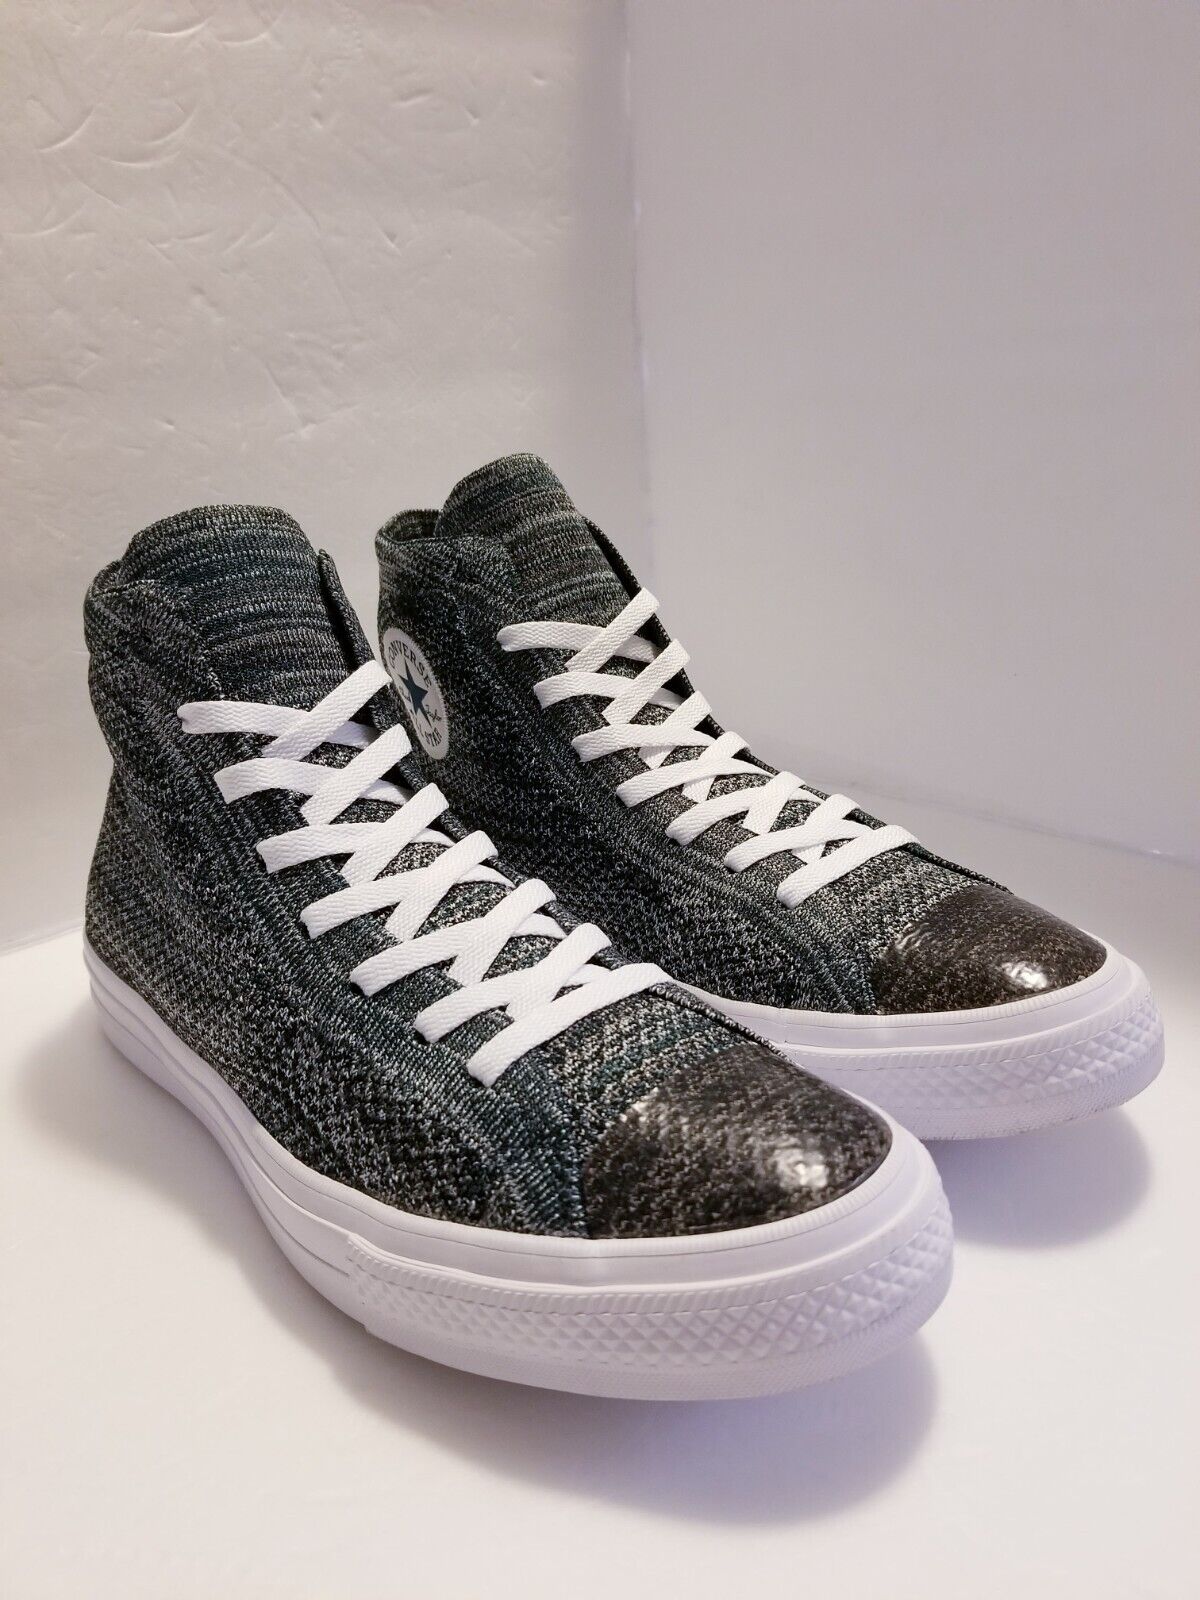 10.5 - Converse Chuck Taylor All Star x Nike Dark Atomic Teal Igloo for sale online | eBay